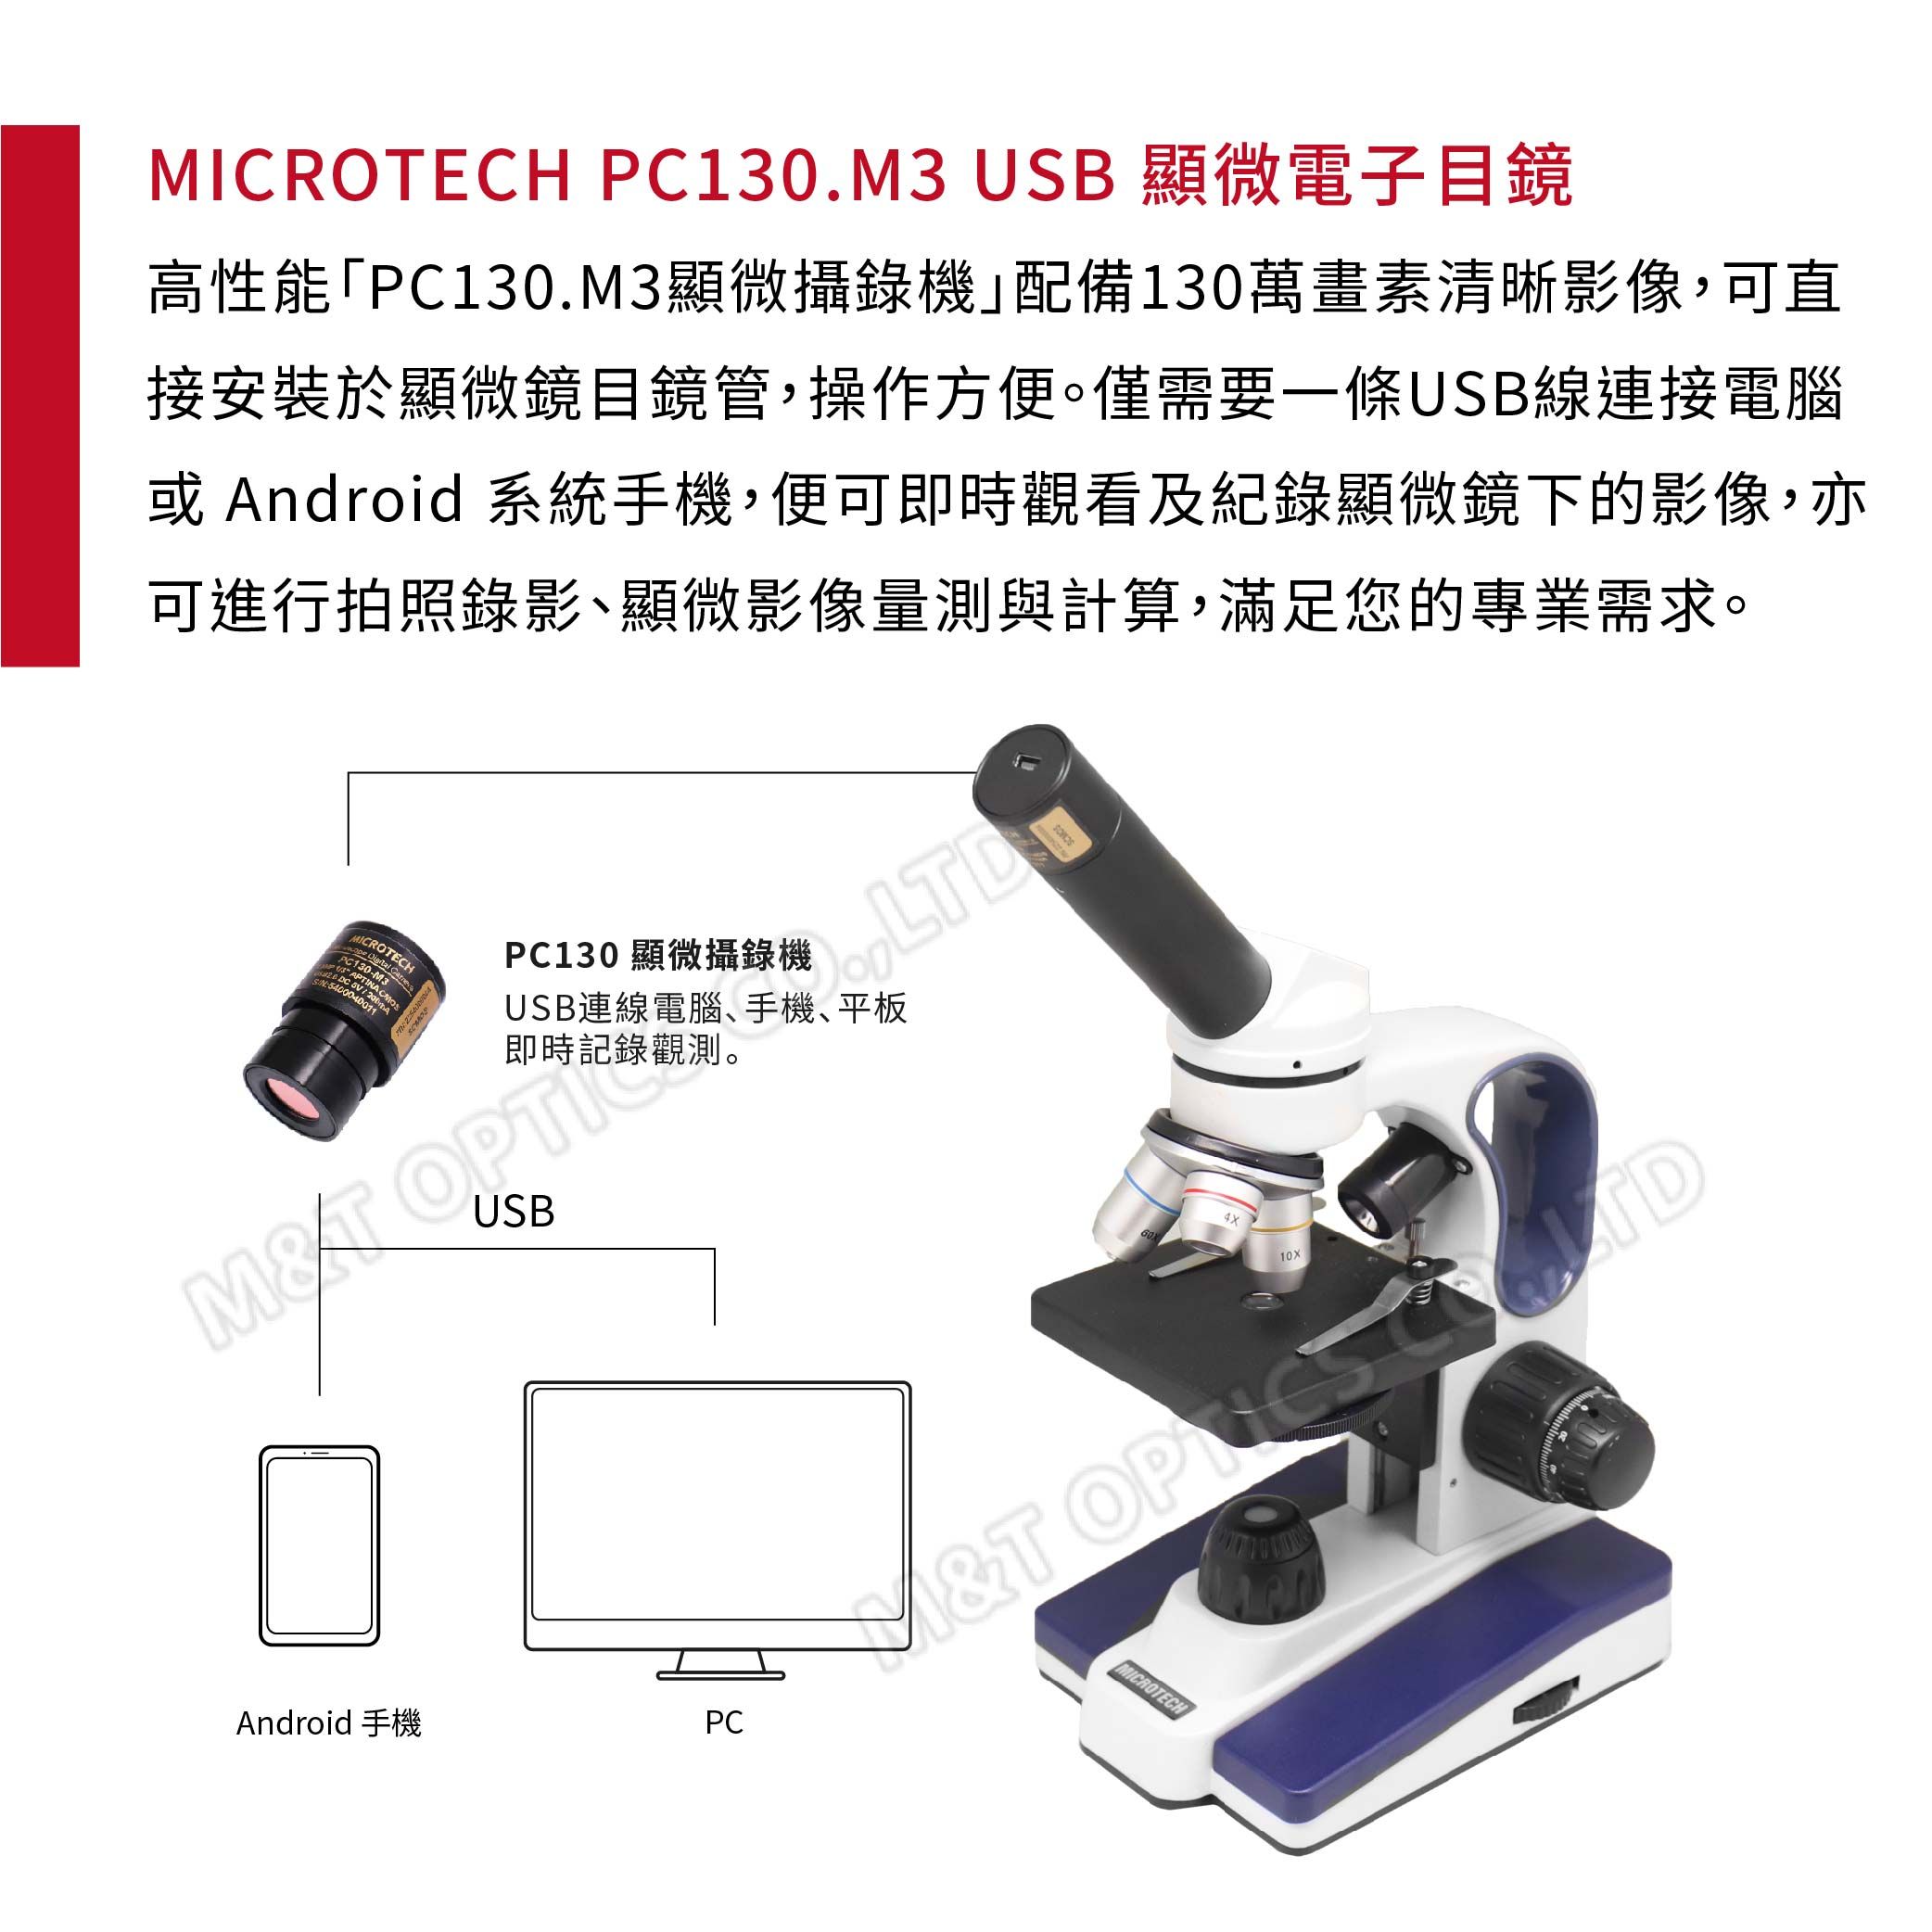 ICROECH 0.3 USB 顯微電子目鏡高性能PC130.M3顯微攝錄機配備130萬畫素清晰影像,可直接安裝於顯微鏡目鏡管,操作方便。僅需要一條USB線連接電腦或 Android 系統手機,便可即時觀看及紀錄顯微鏡下的影像,亦可進行拍照錄影顯微影像量測與計算,滿足您的專業需求。PC13  LTDPC130 顯微攝錄機USB連線電腦、手機、平板即時記錄觀測。USBMT OPAndroid 手機PC10XM&T OP MICROTECH